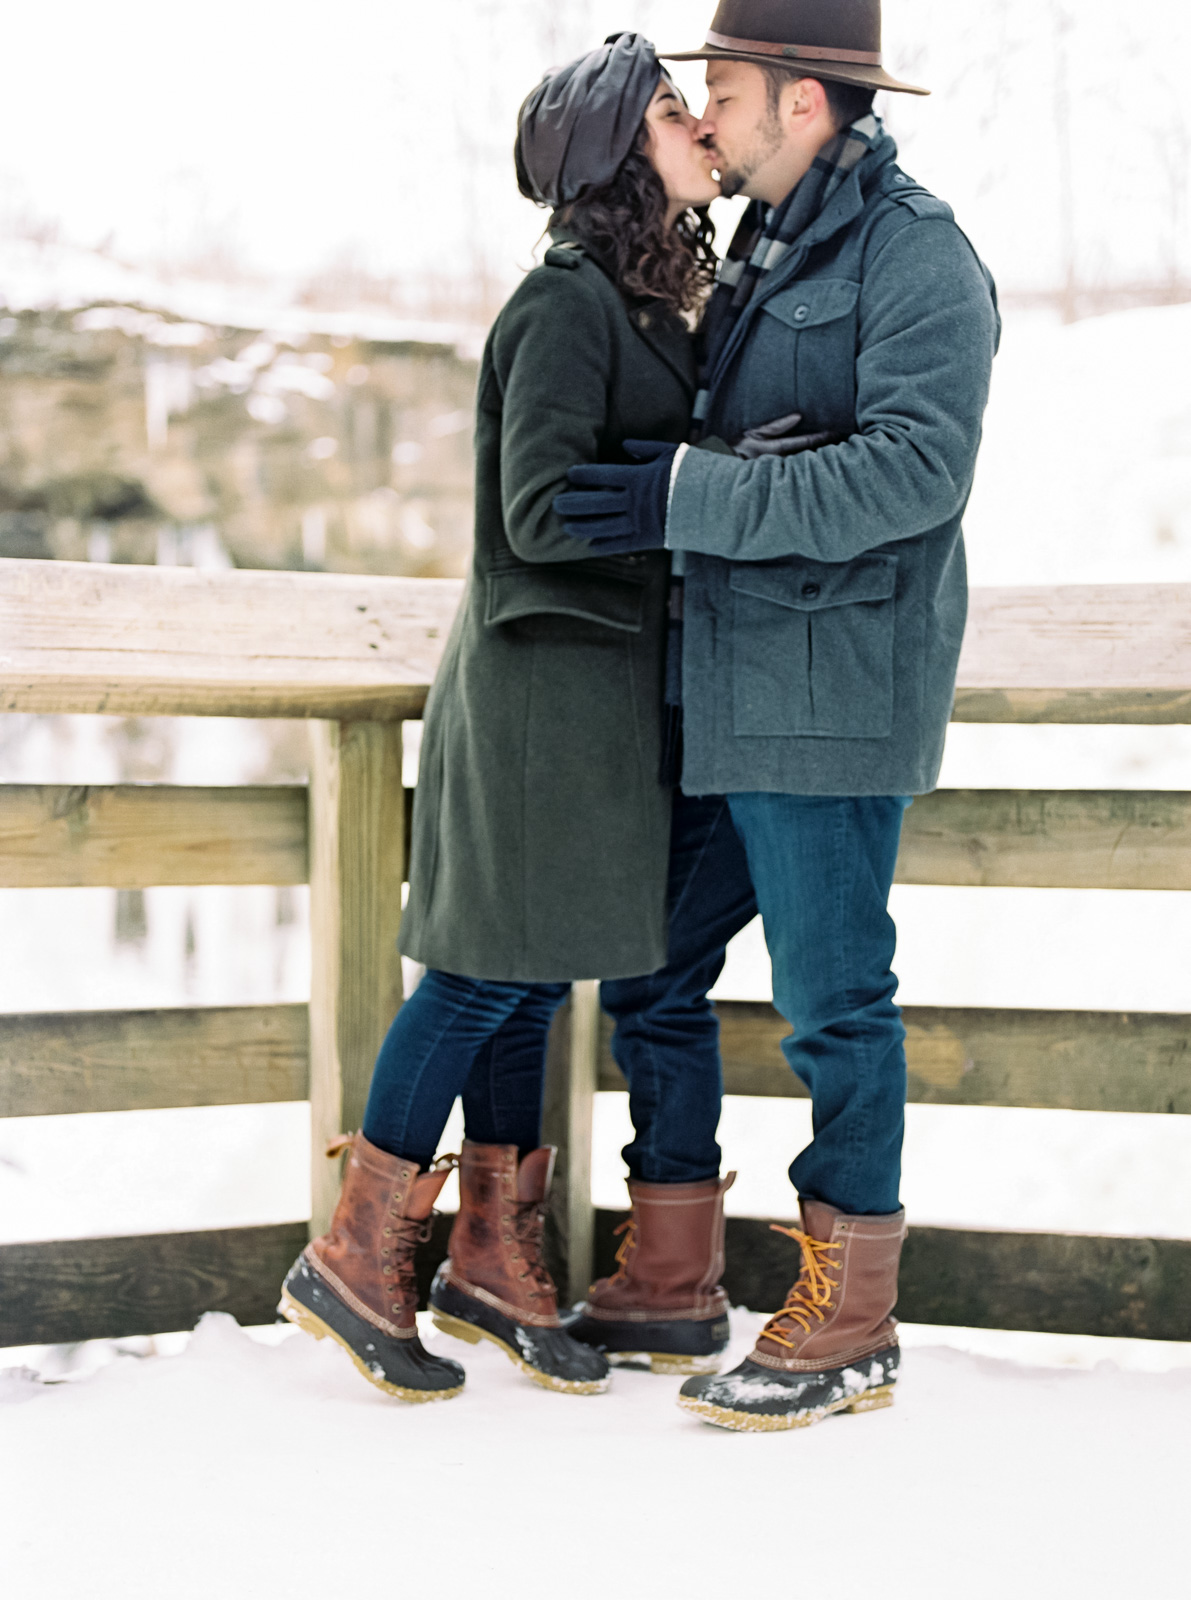 Romantic Winter Photos - Brandywine Falls - Matt Erickson Photography